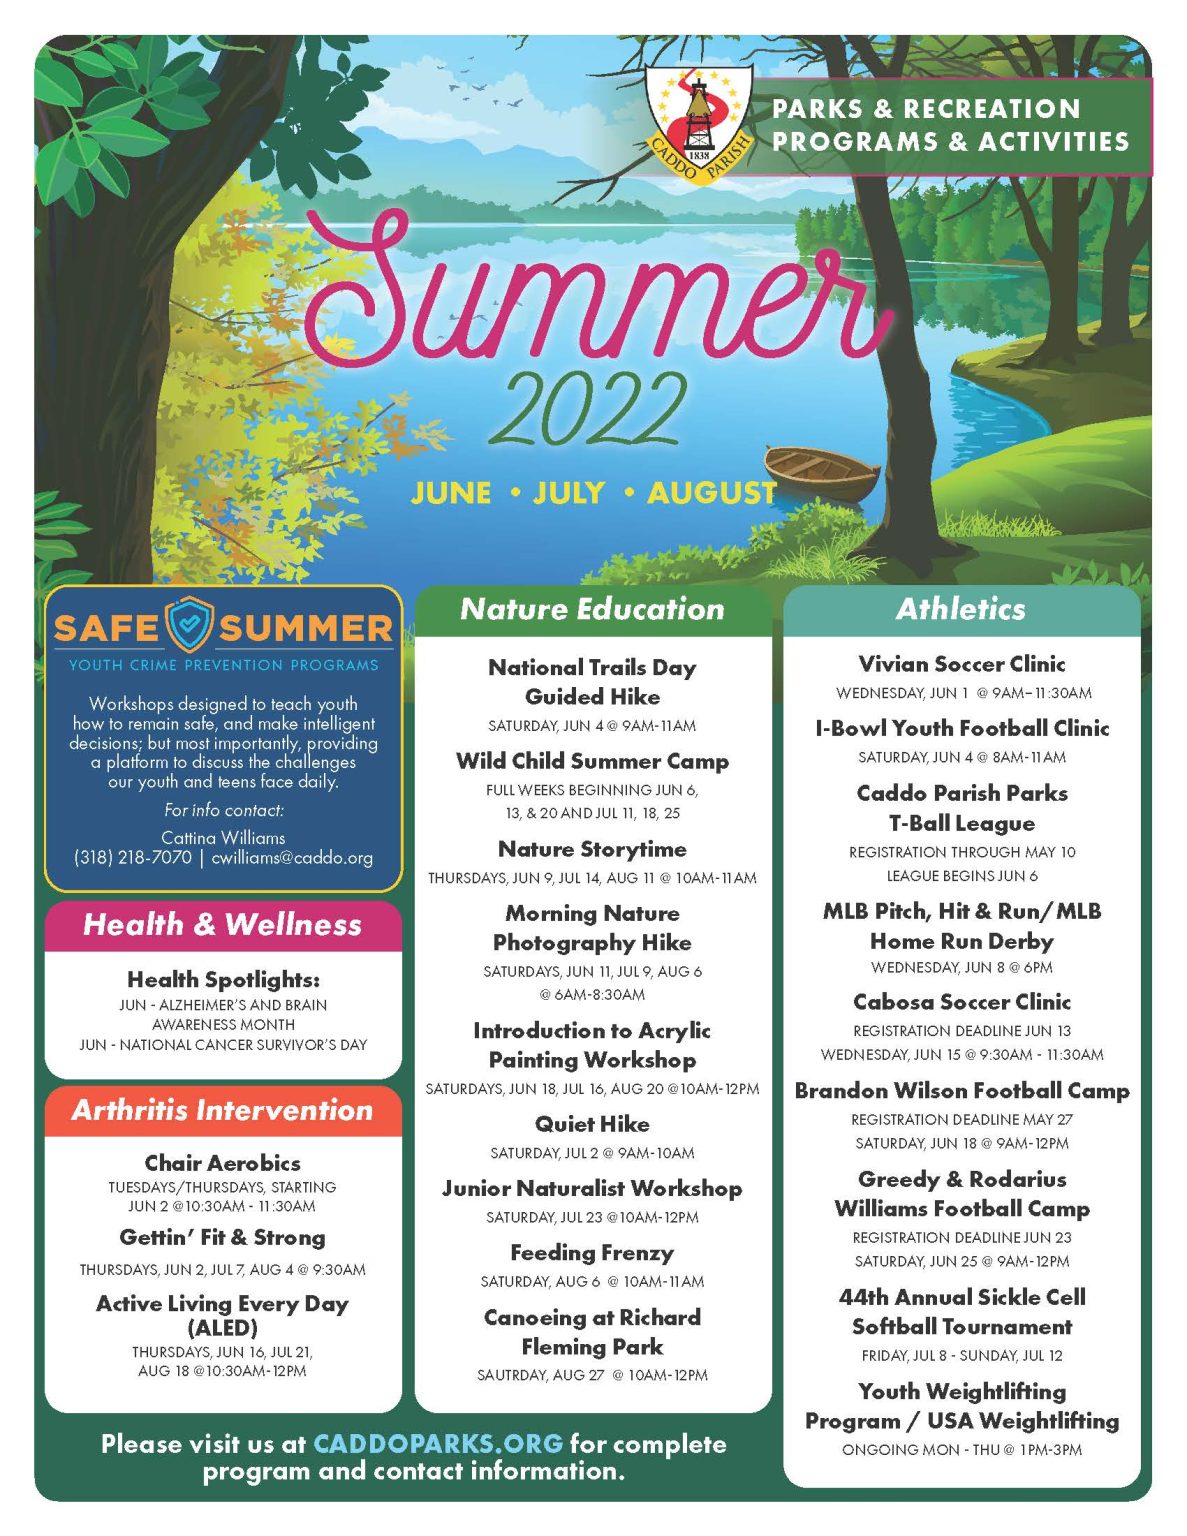 2022 Summer Programs & Activities Announced Caddo Parish